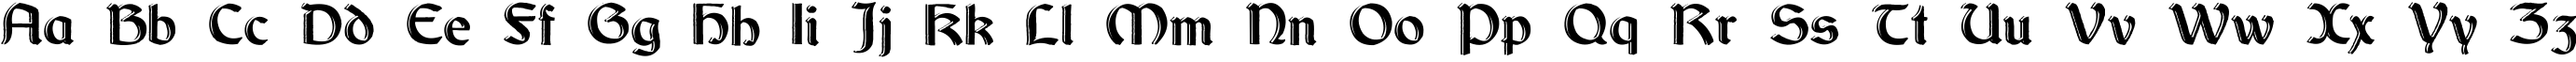 Пример написания английского алфавита шрифтом Dundalk_HandDrawn